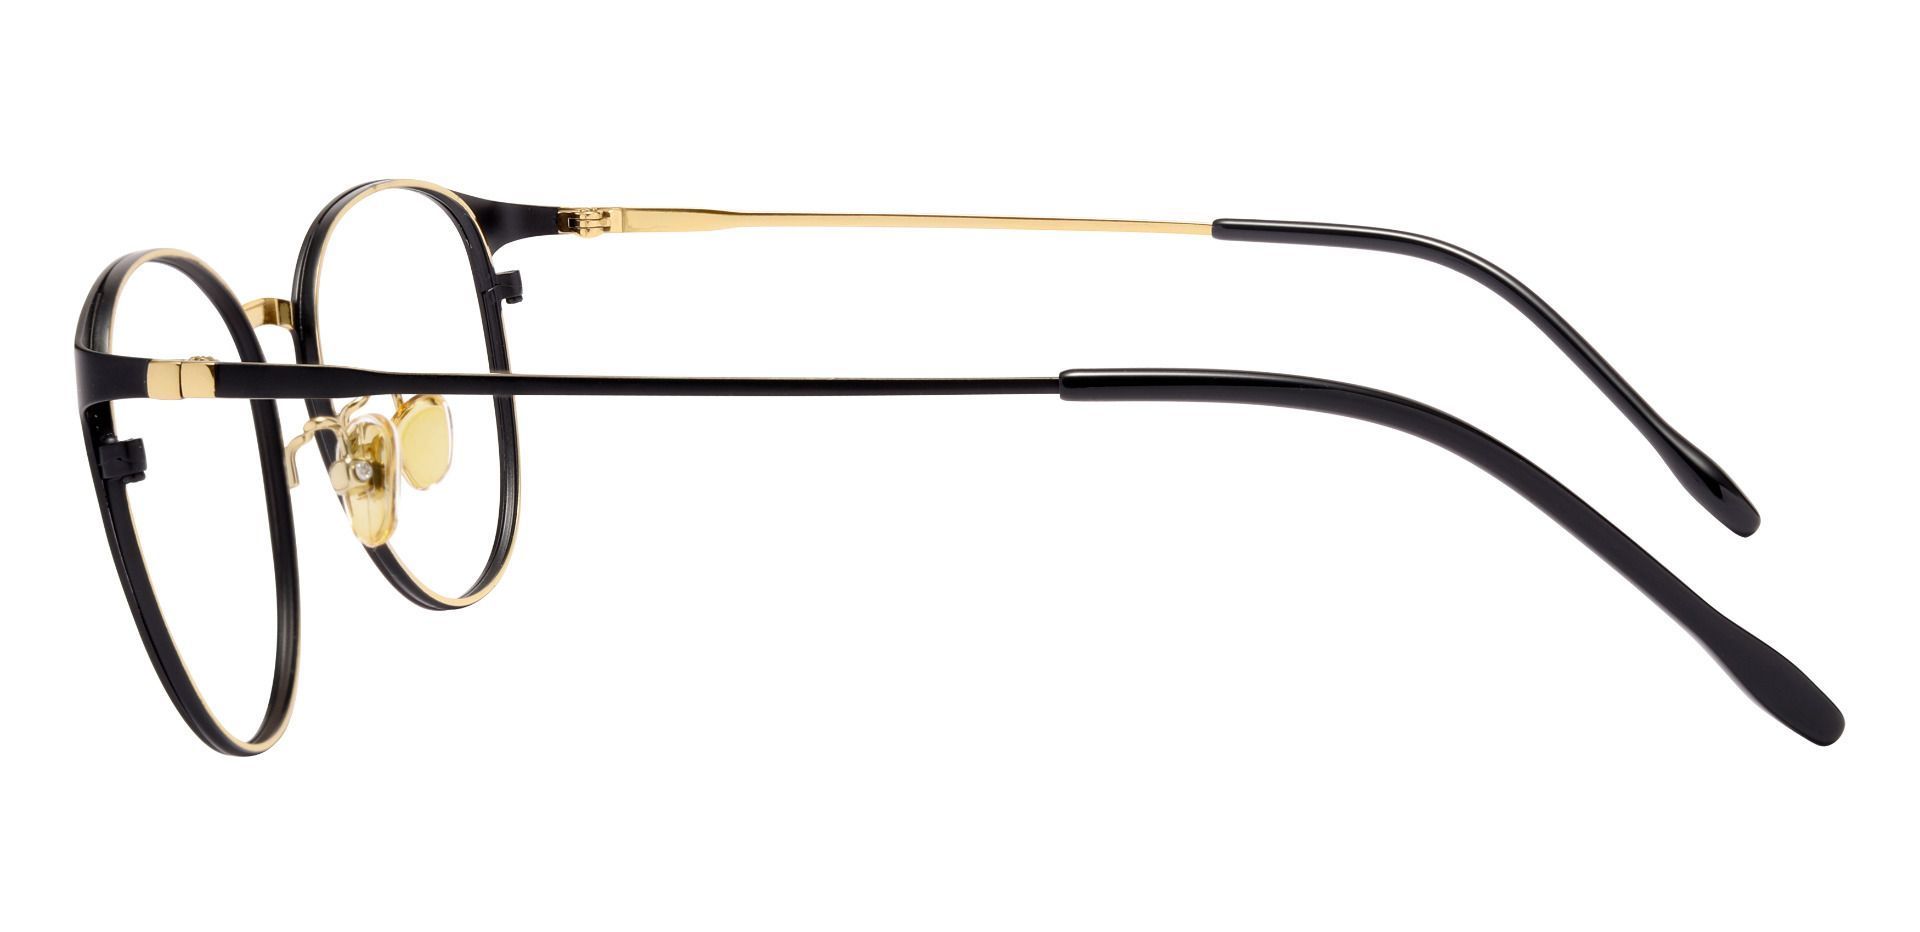 Bertie Oval Prescription Glasses - Black